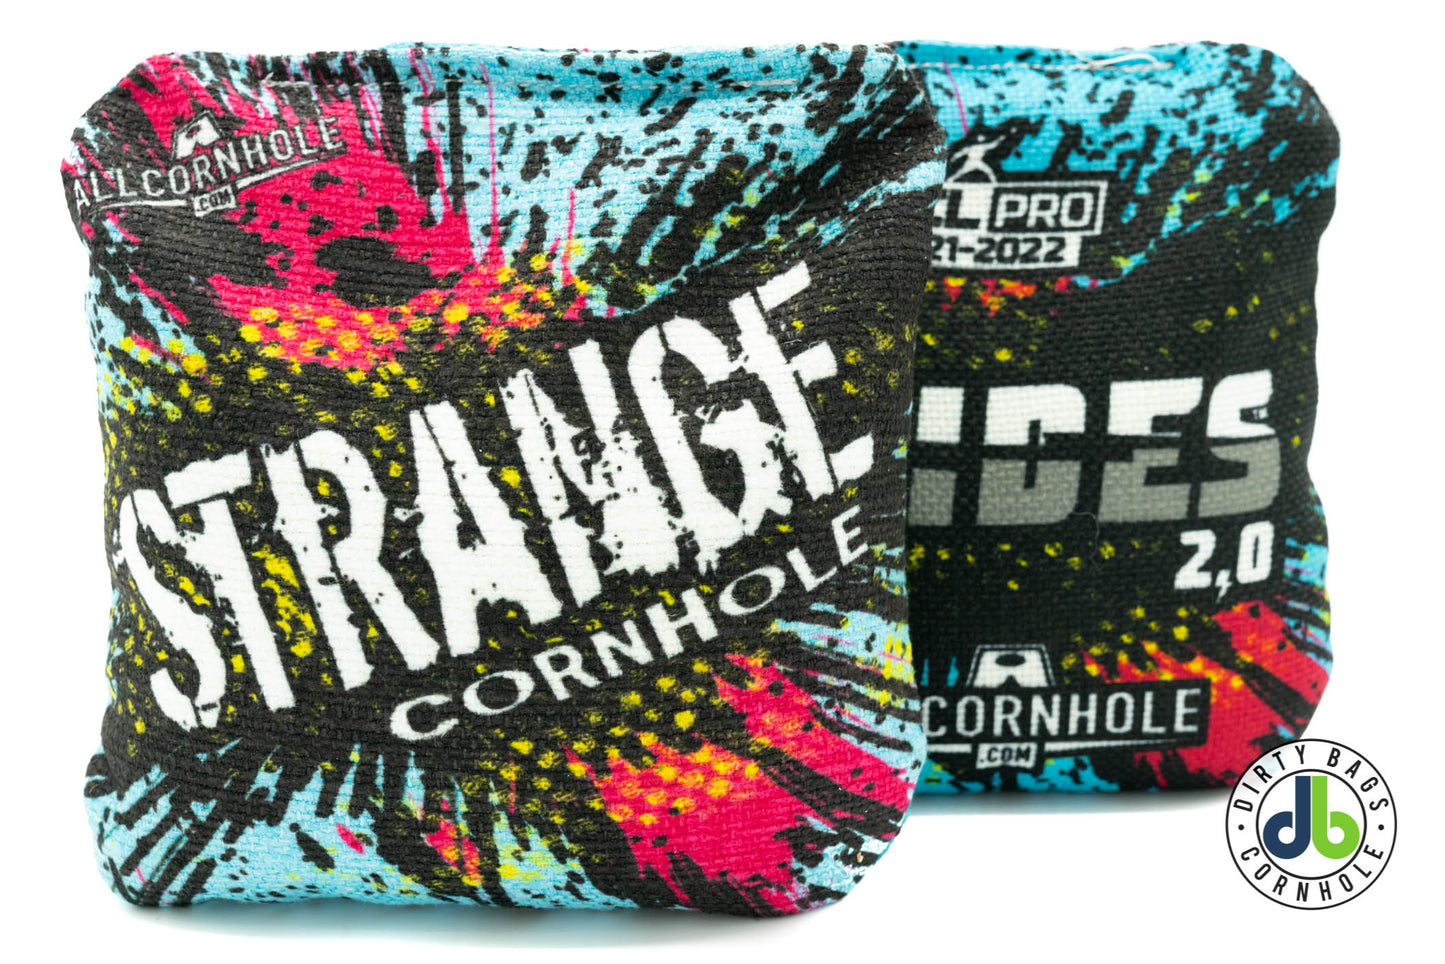 All-Slides 2.0 - Strange Cornhole Blast Edition (Set - 4 Bags)